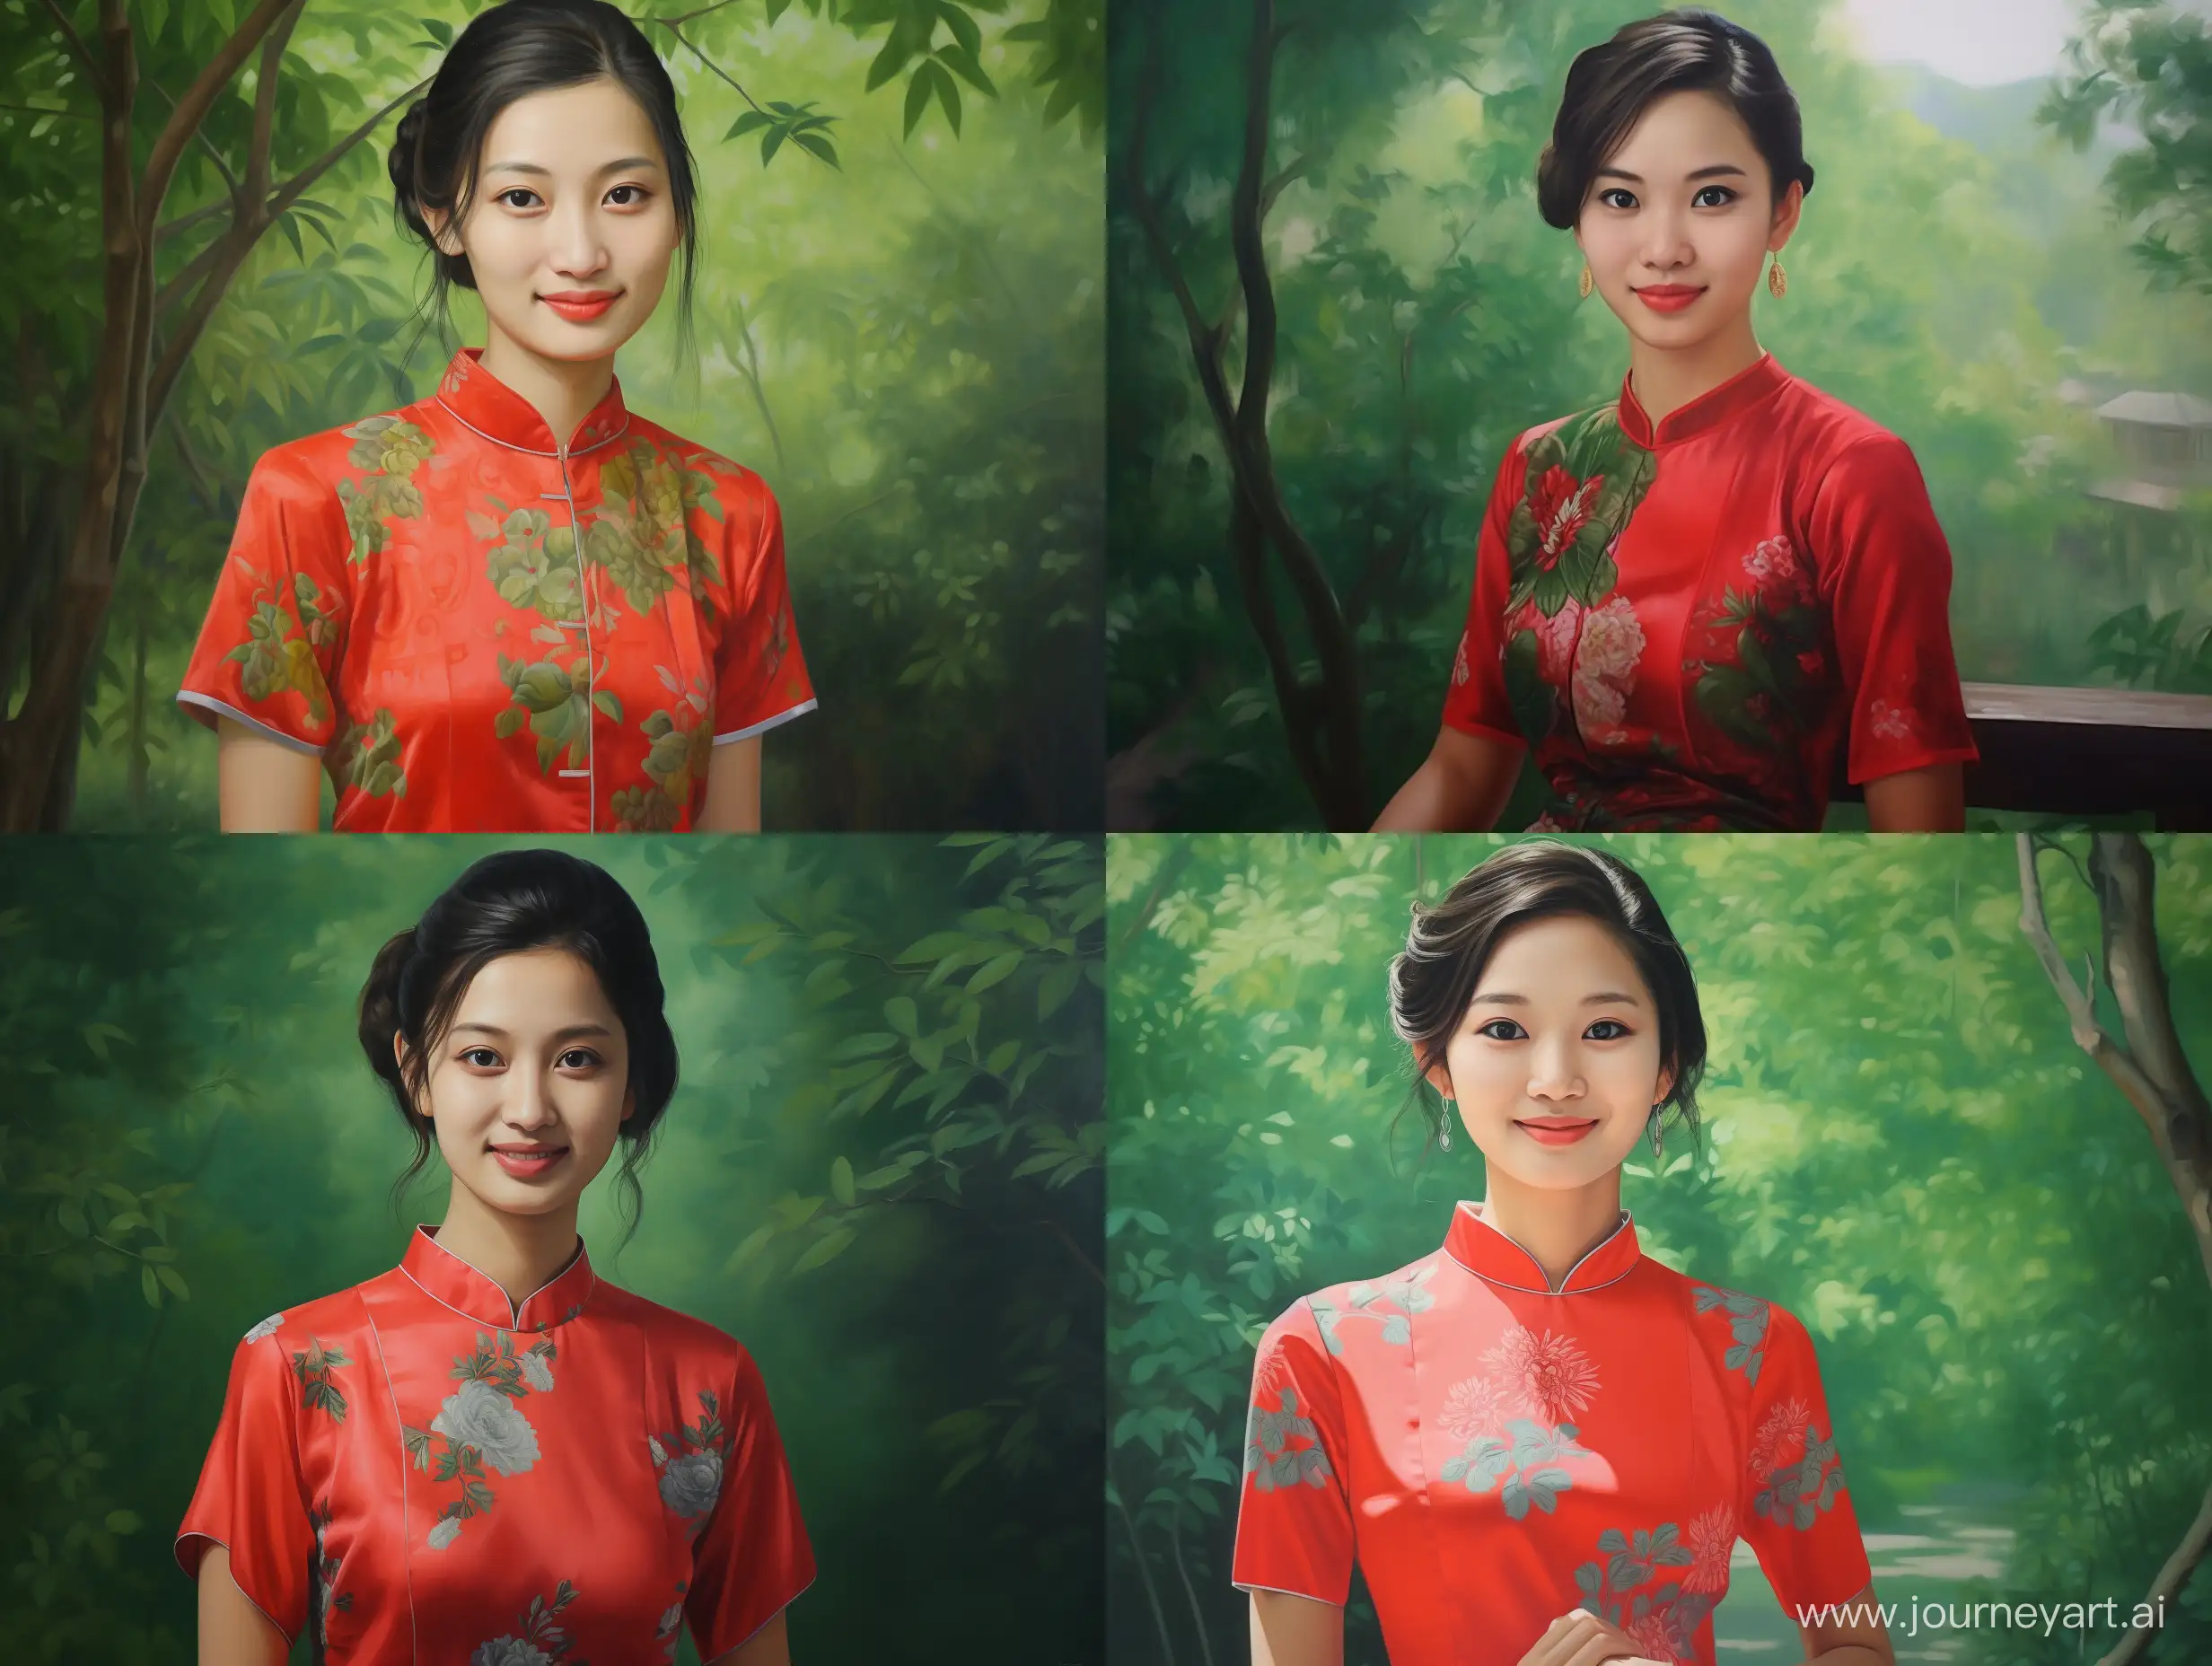 1girl, beautiful, Guangzhou Xiguan lady, (cheongsam:1.2), smiling at the camera, full body, green background, front view, (red:1.3)

